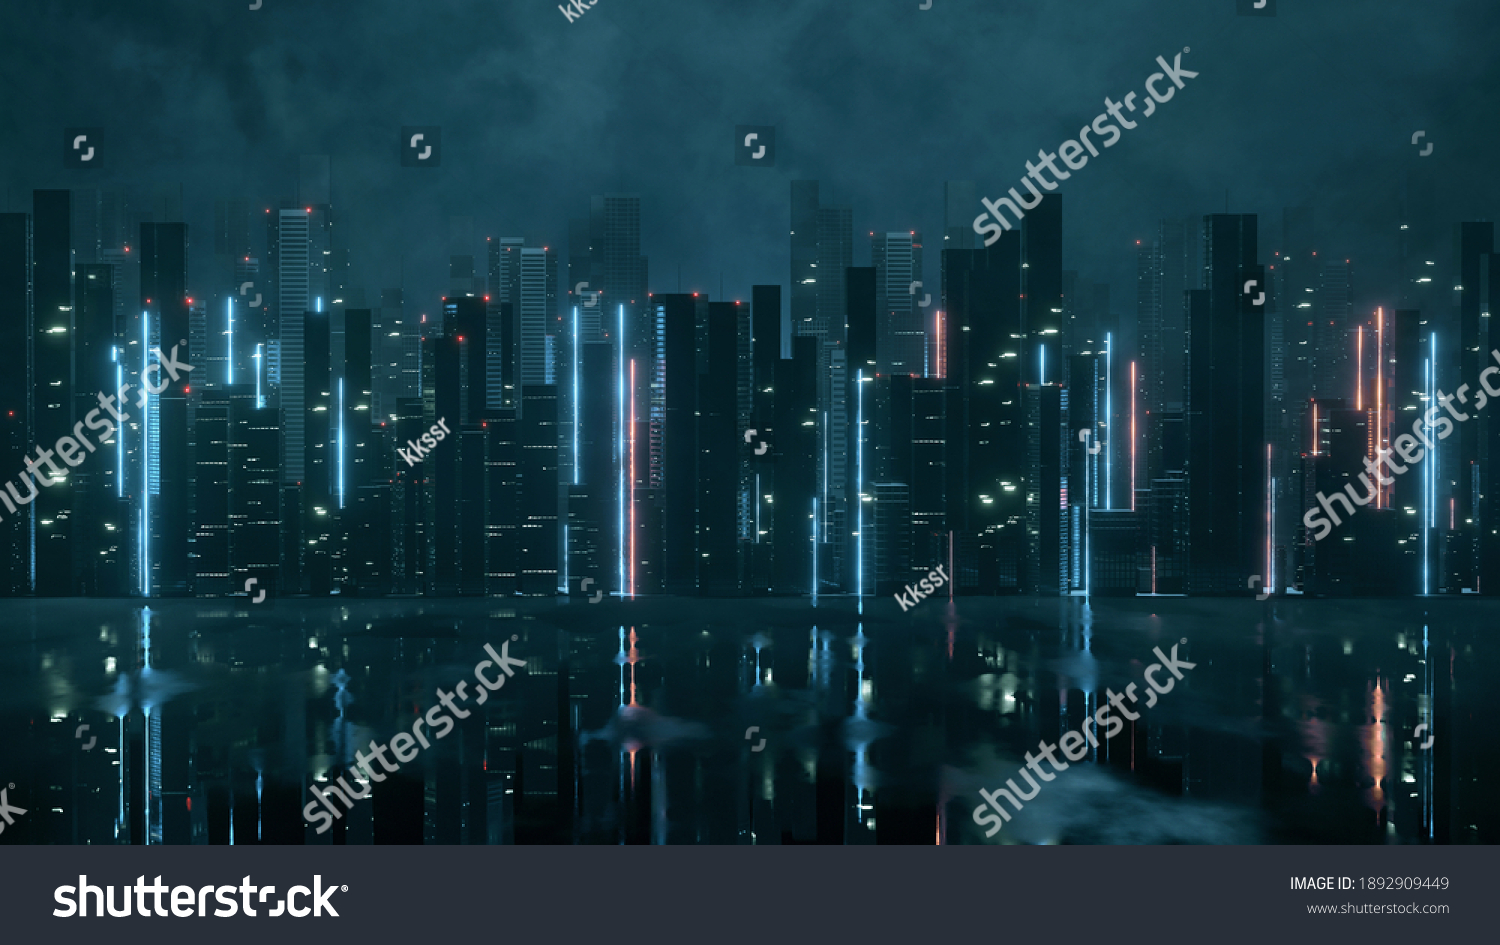 6,267 Sci Fi Skyline Images, Stock Photos & Vectors | Shutterstock